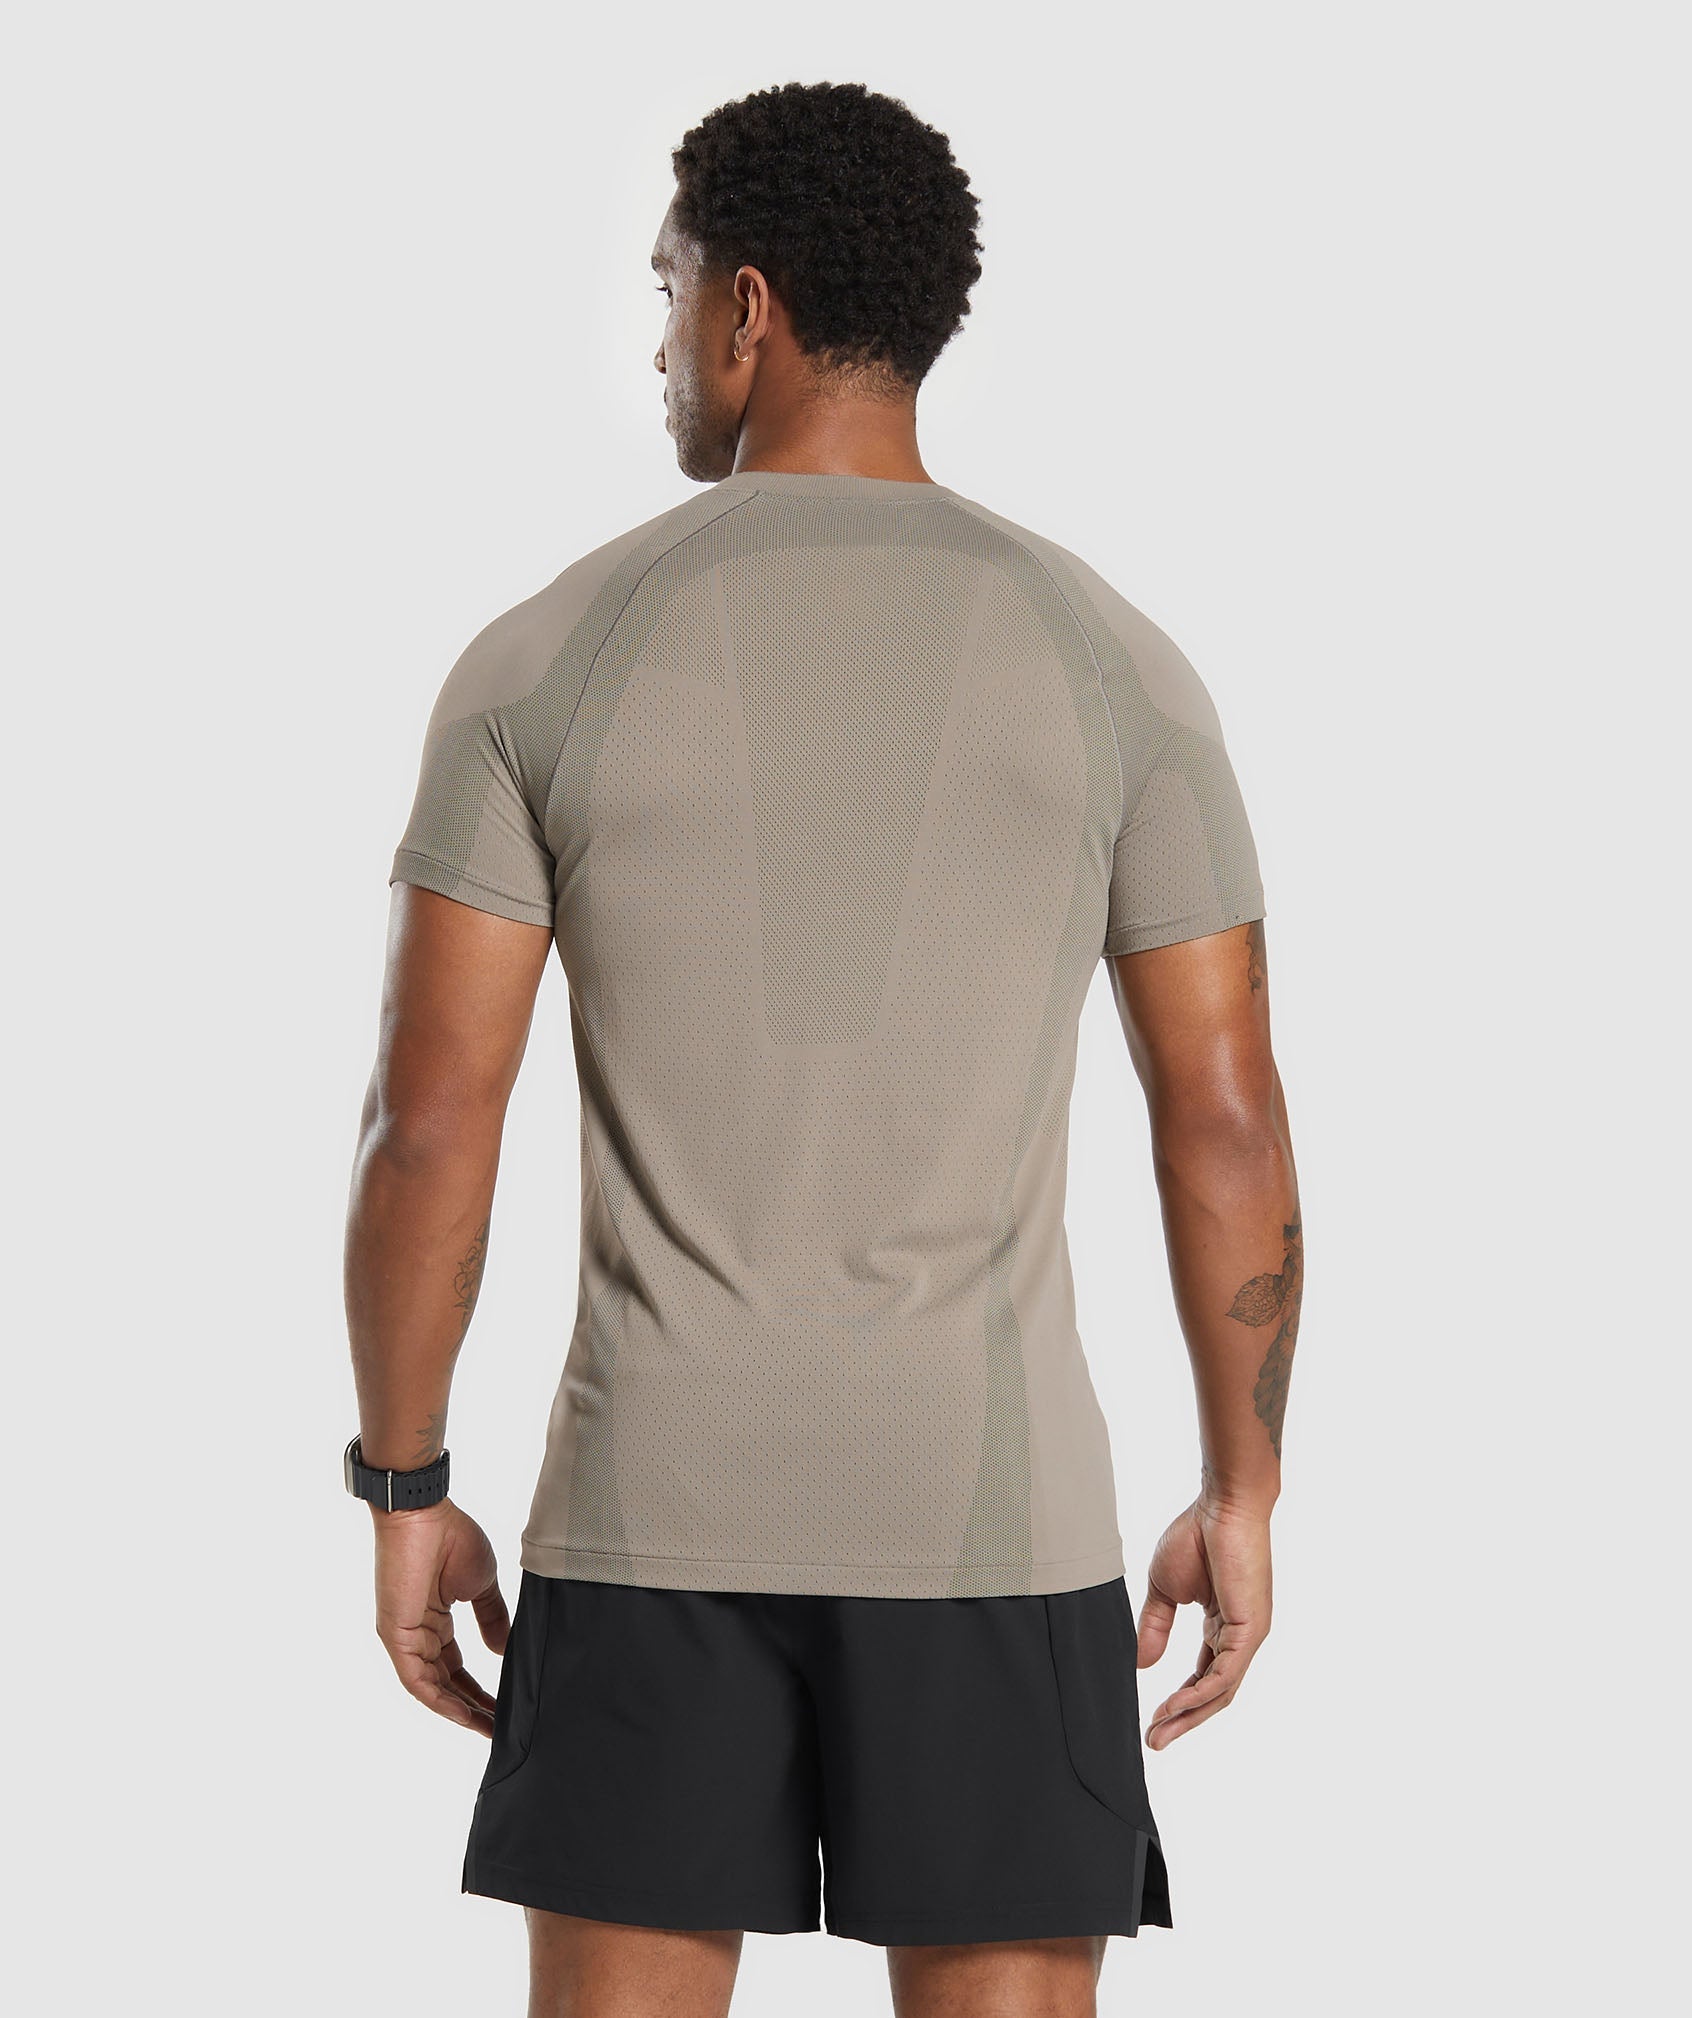 Apex Seamless T-Shirt in Linen Brown/Black - view 2